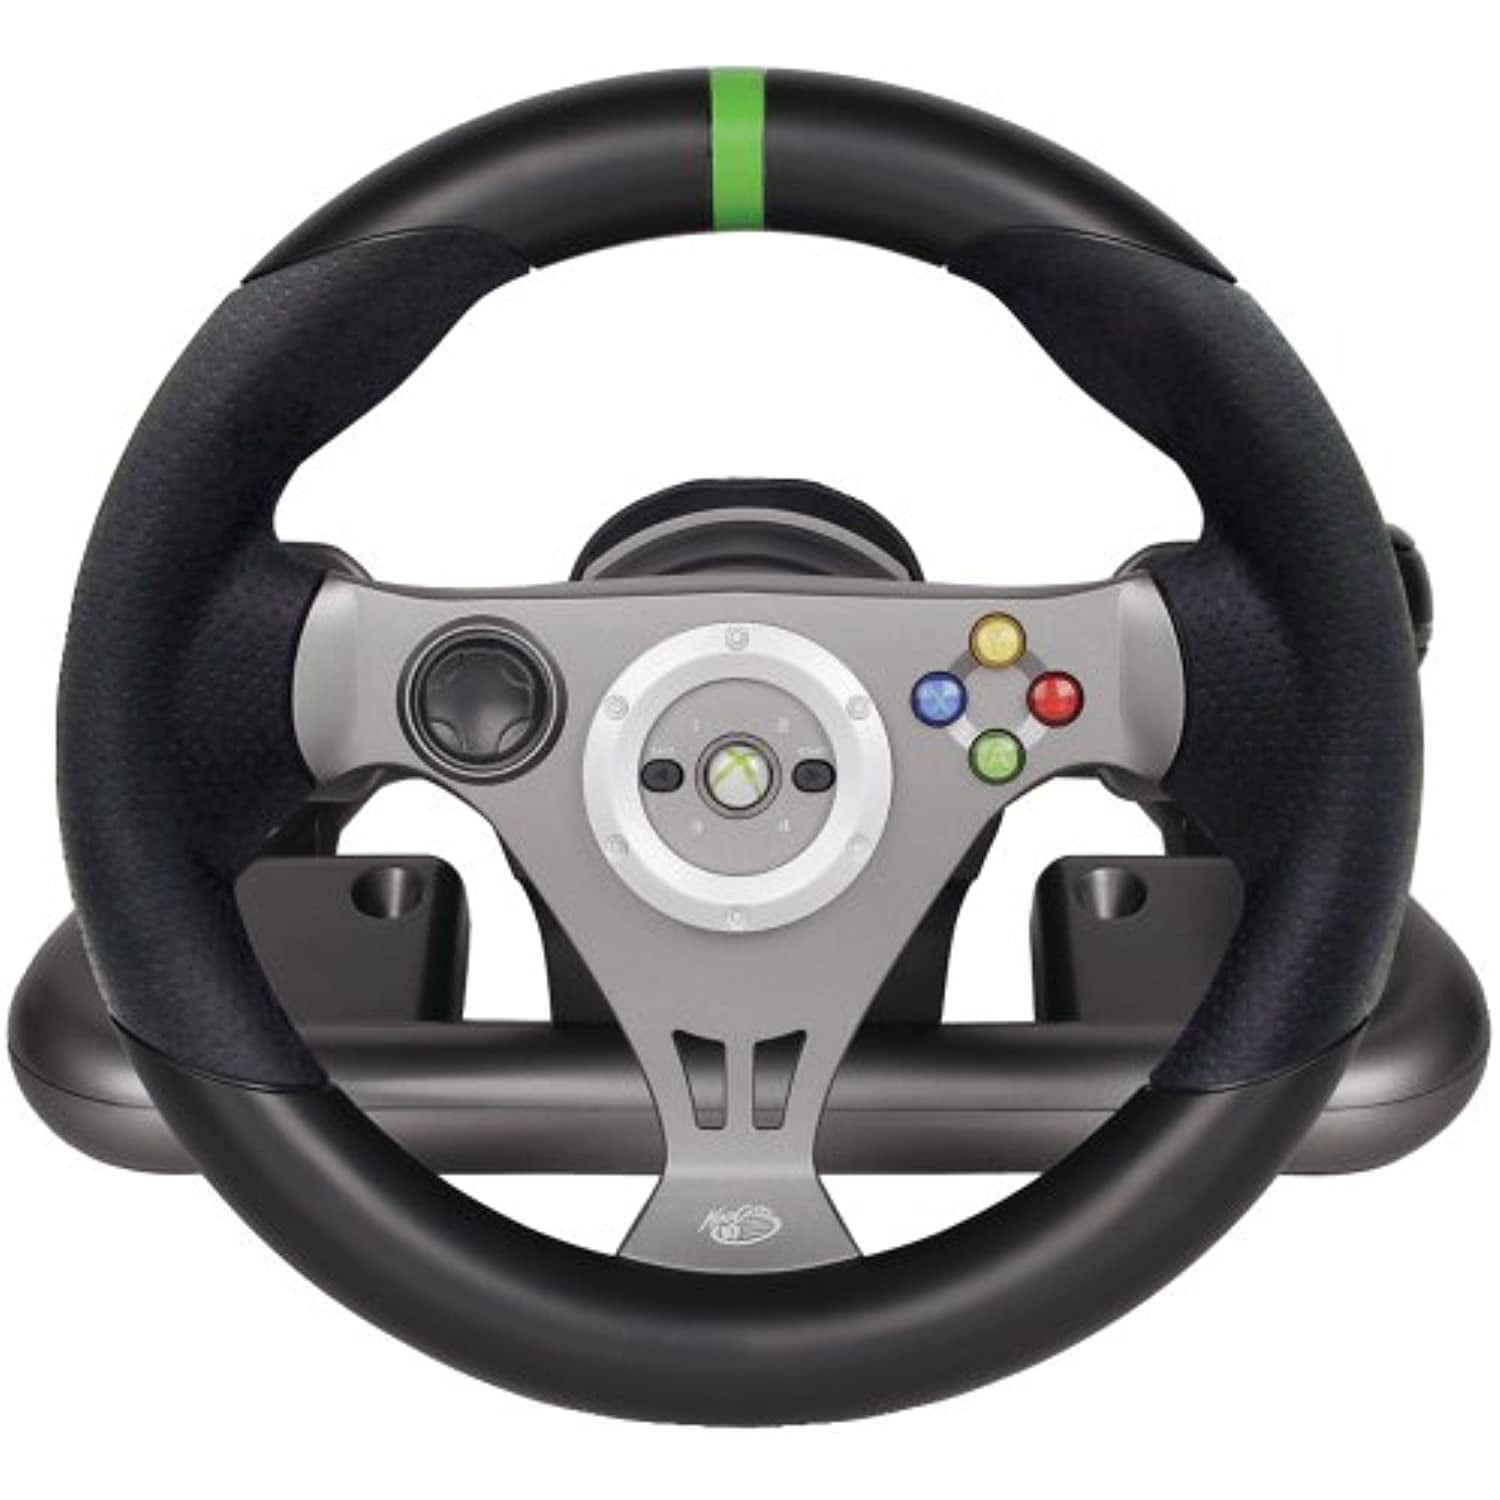 Руль мом рейсинг. Руль Xbox 360 Wireless Racing Wheel. Руль Mad Catz Wireless Racing Wheel for Xbox 360. Mad Catz Wireless Racing Wheel for Xbox 360. Руль Mad Catz Wireless Racing Wheel (рулевое колесо, педали, Xbox 360).